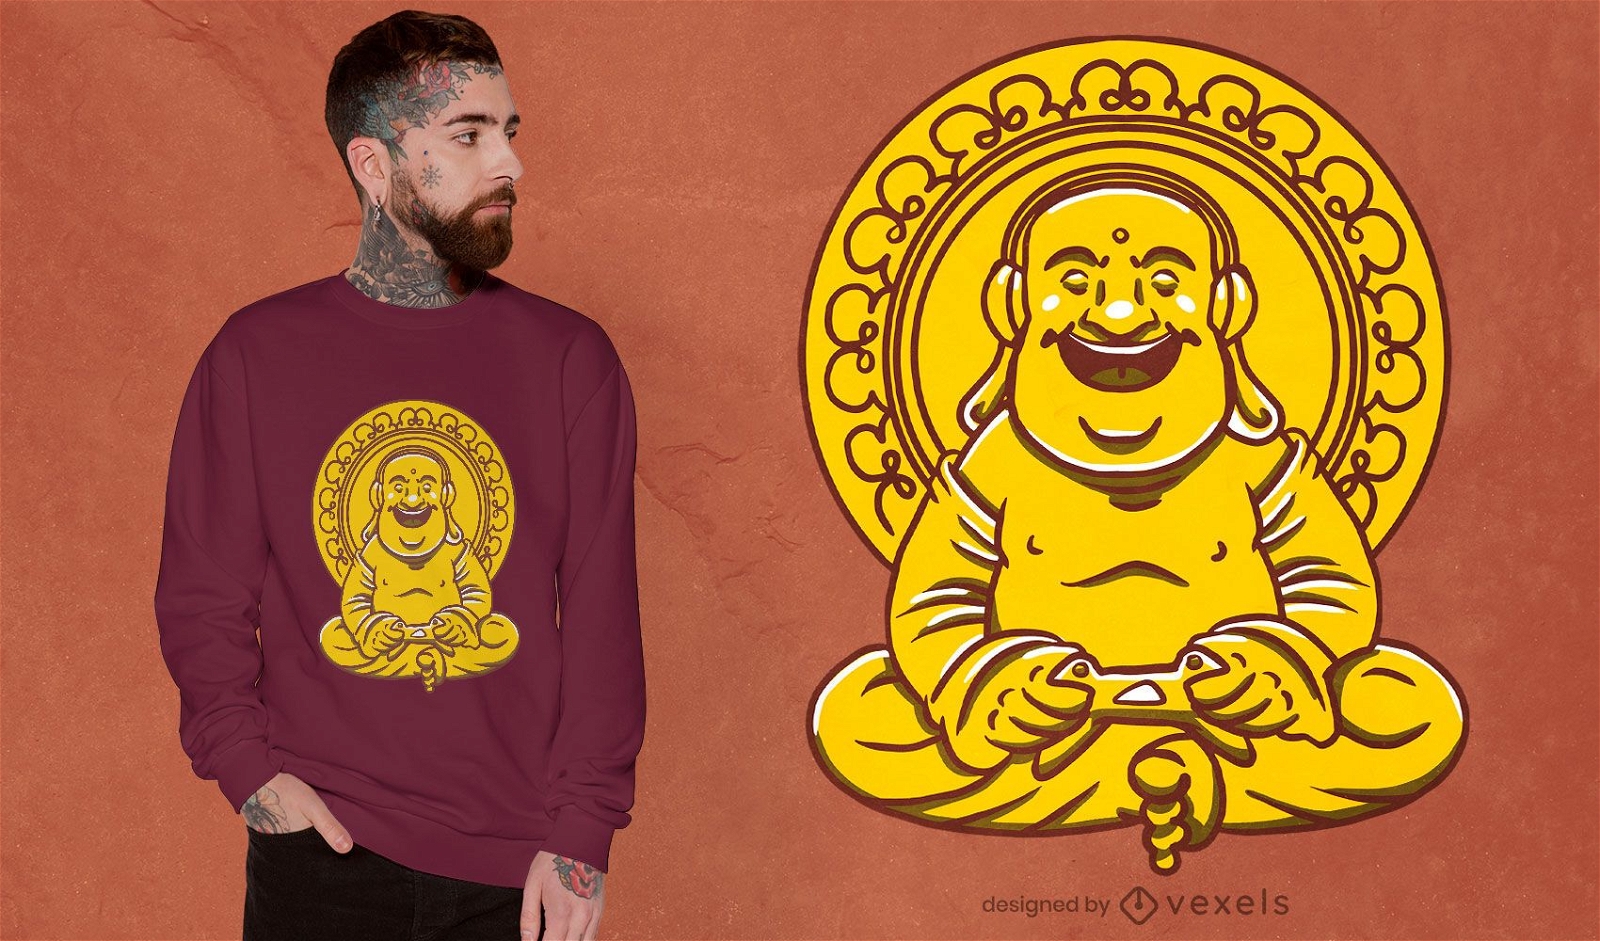 Buddha statue playing videogames t-shirt design